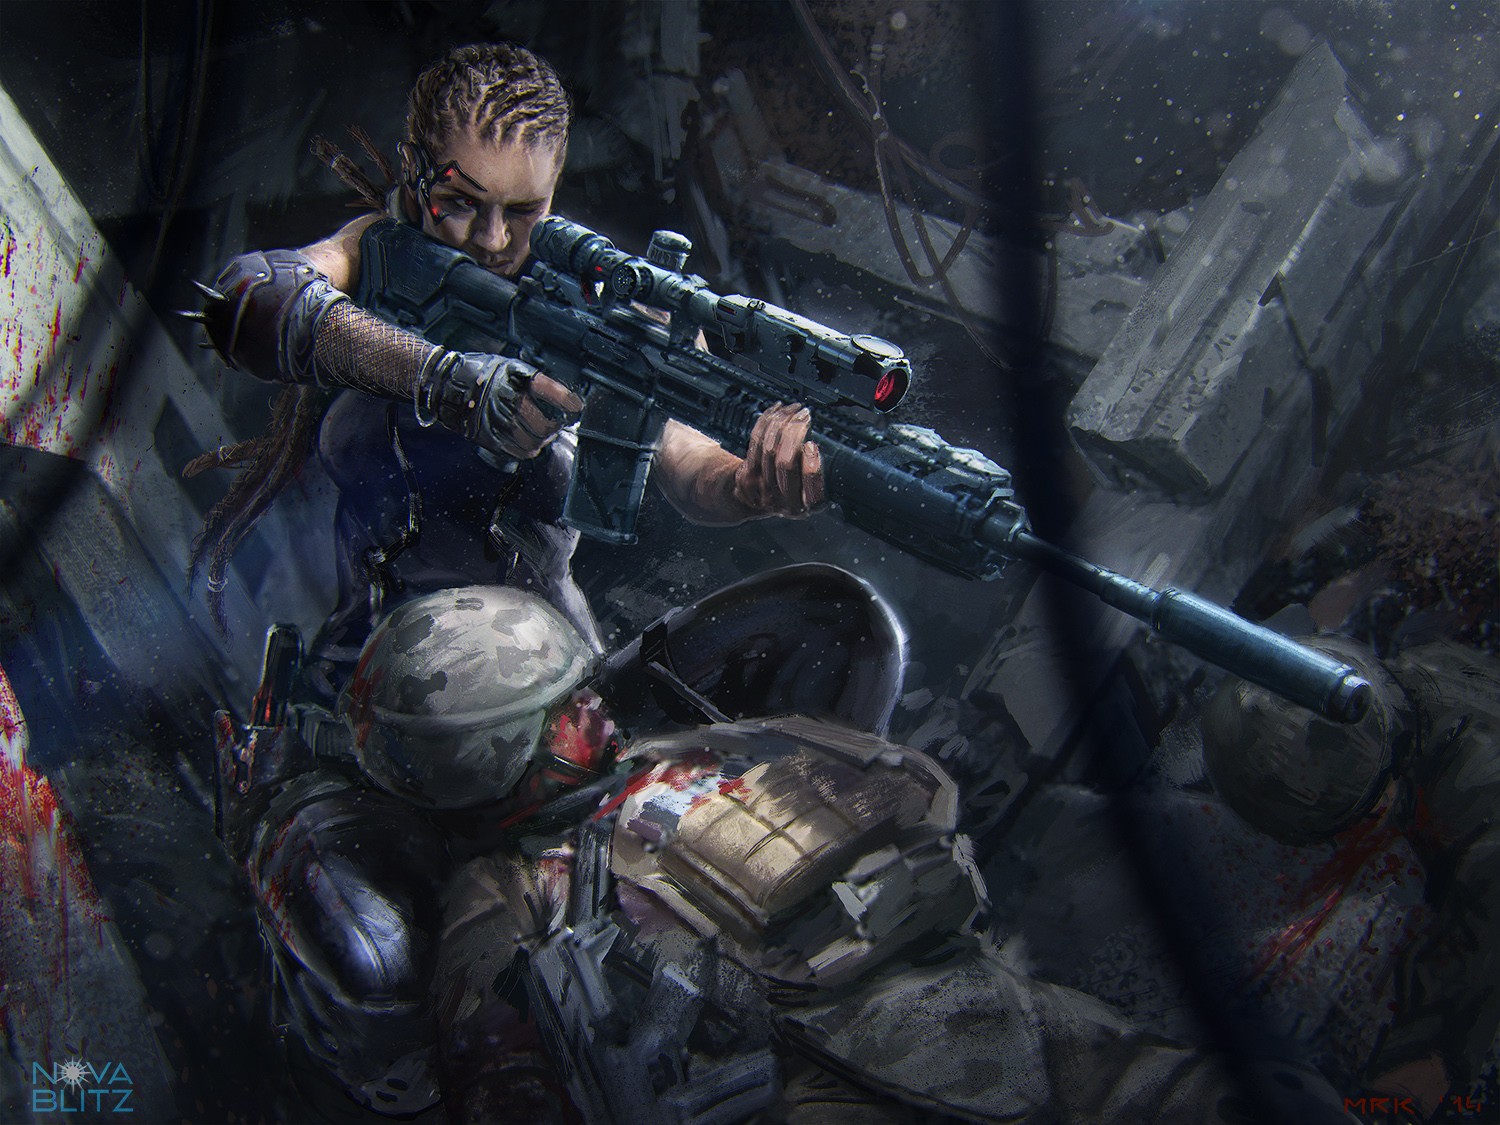 General 1500x1125 futuristic sniper rifle blood women aiming weapon long hair girls with guns